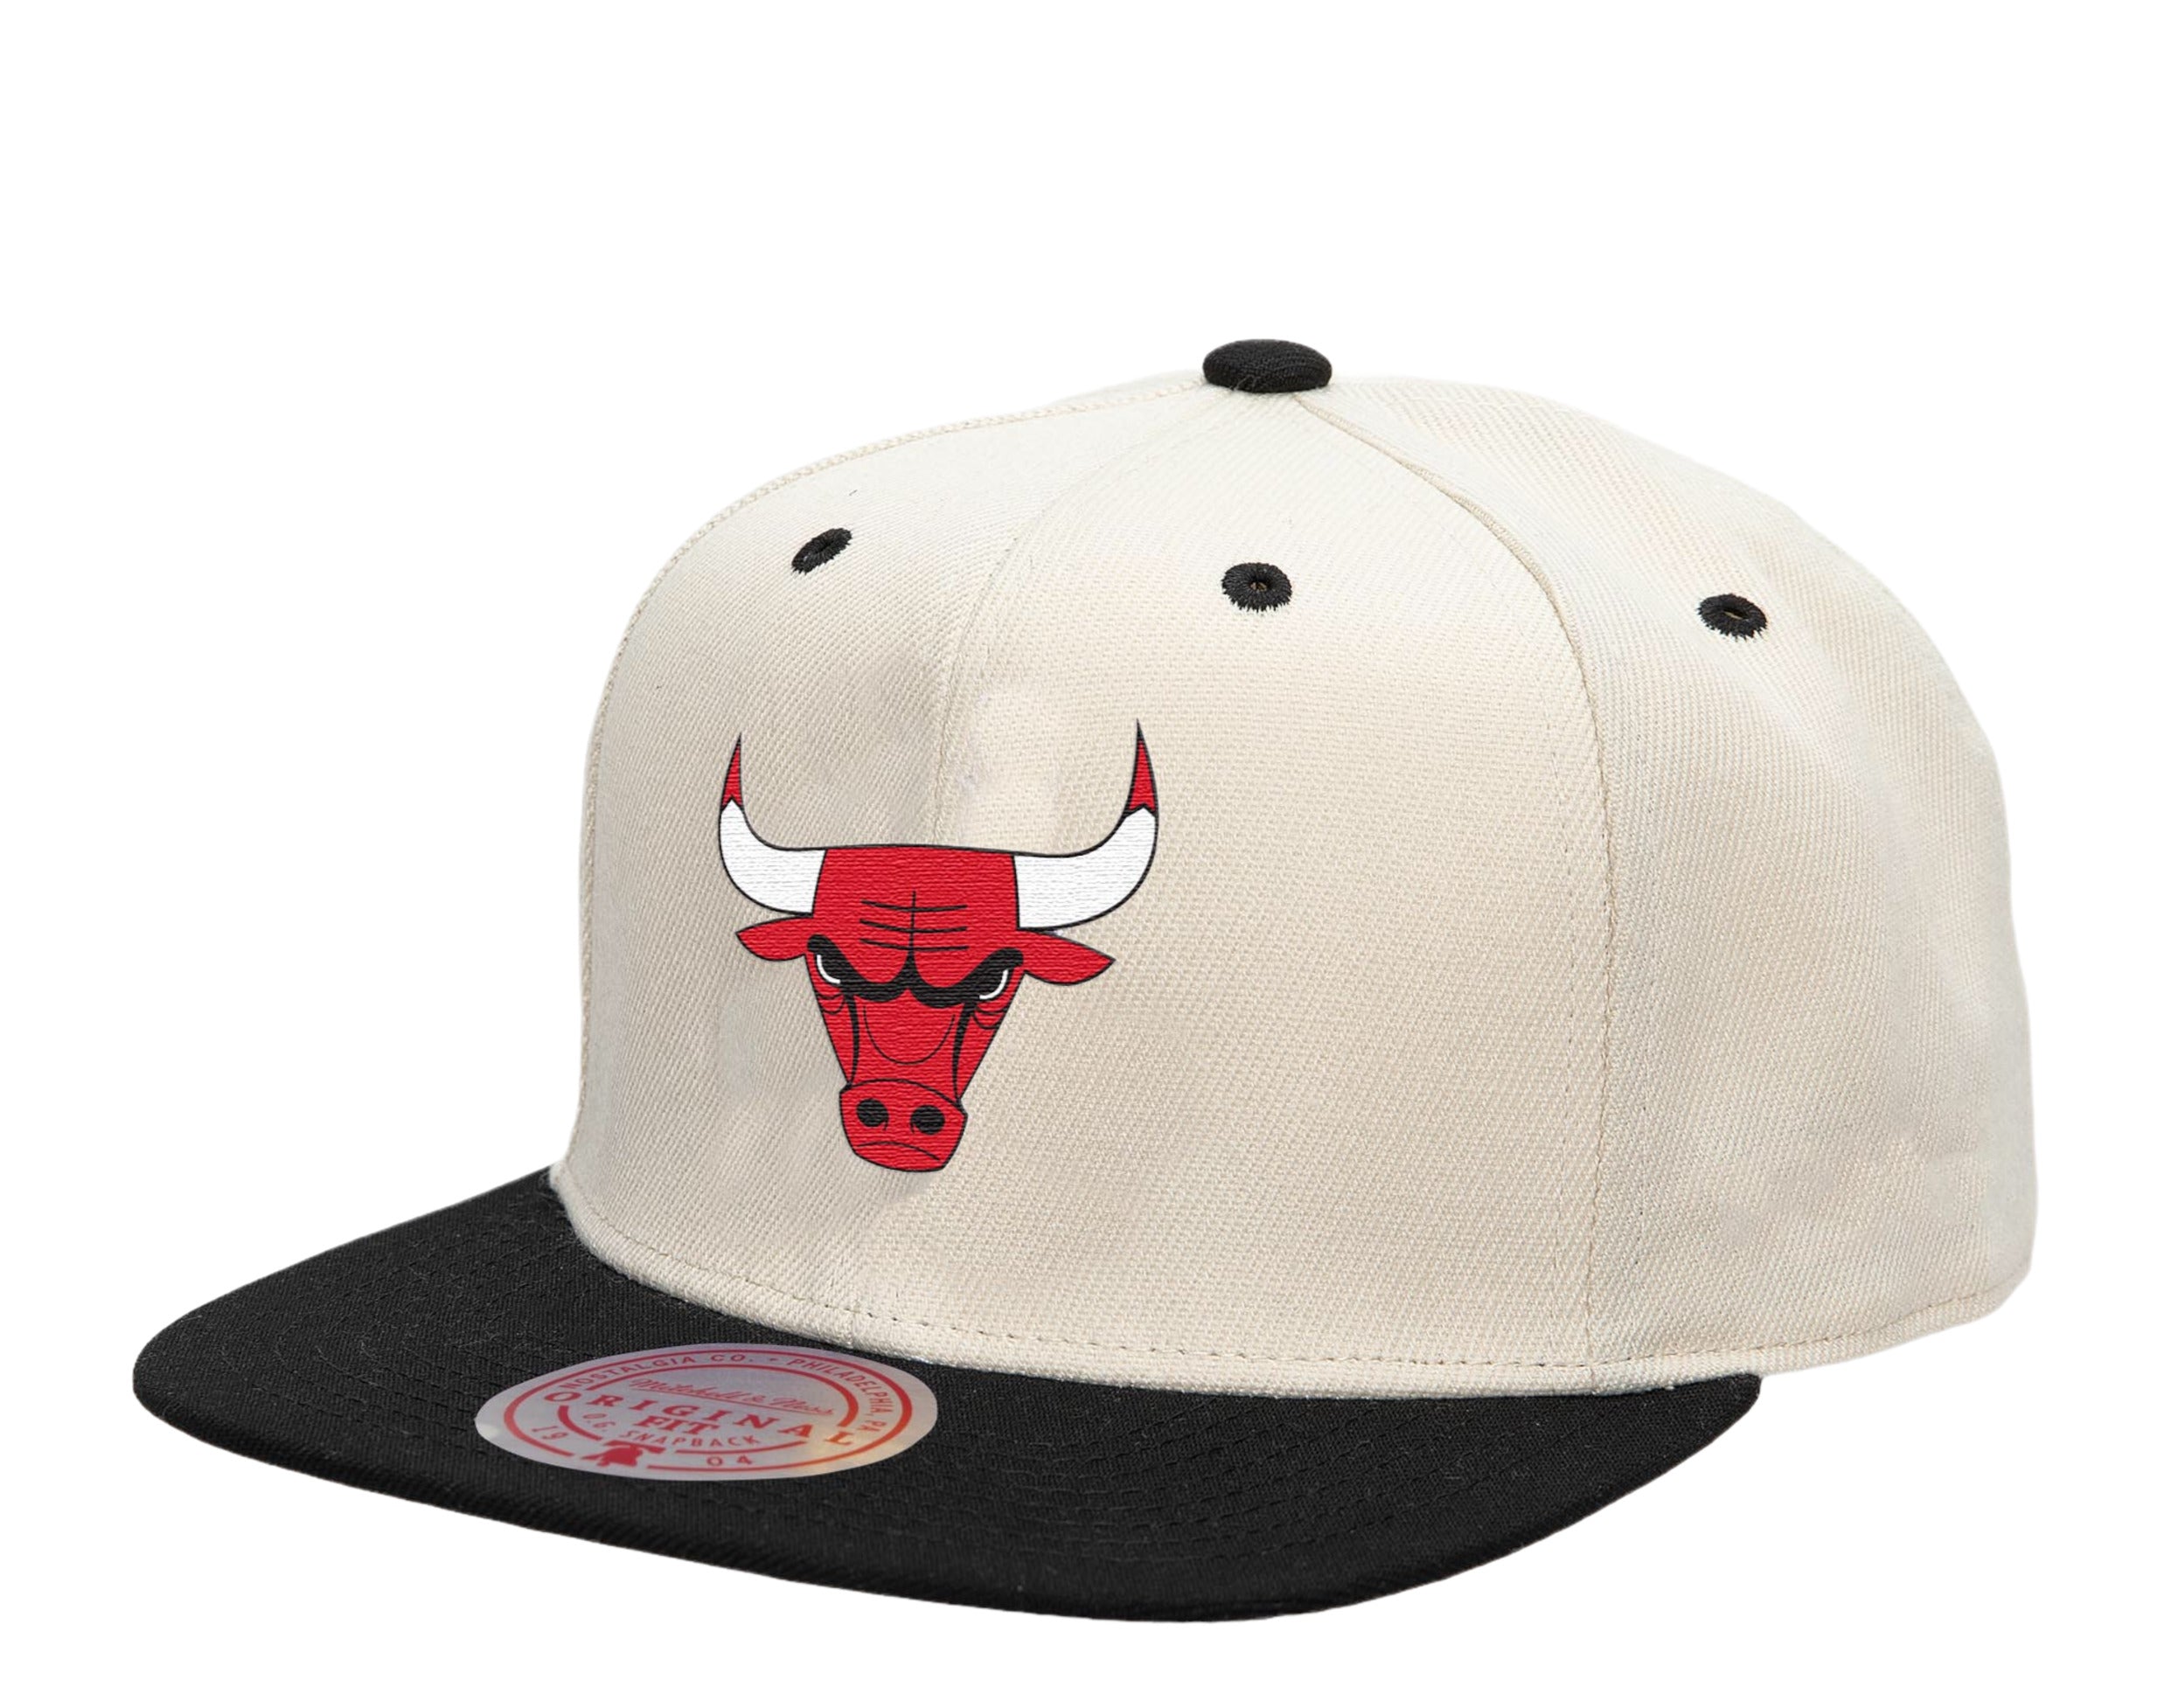 Mitchell & Ness NBA Chicago Bulls Snapback Hat Black Red White